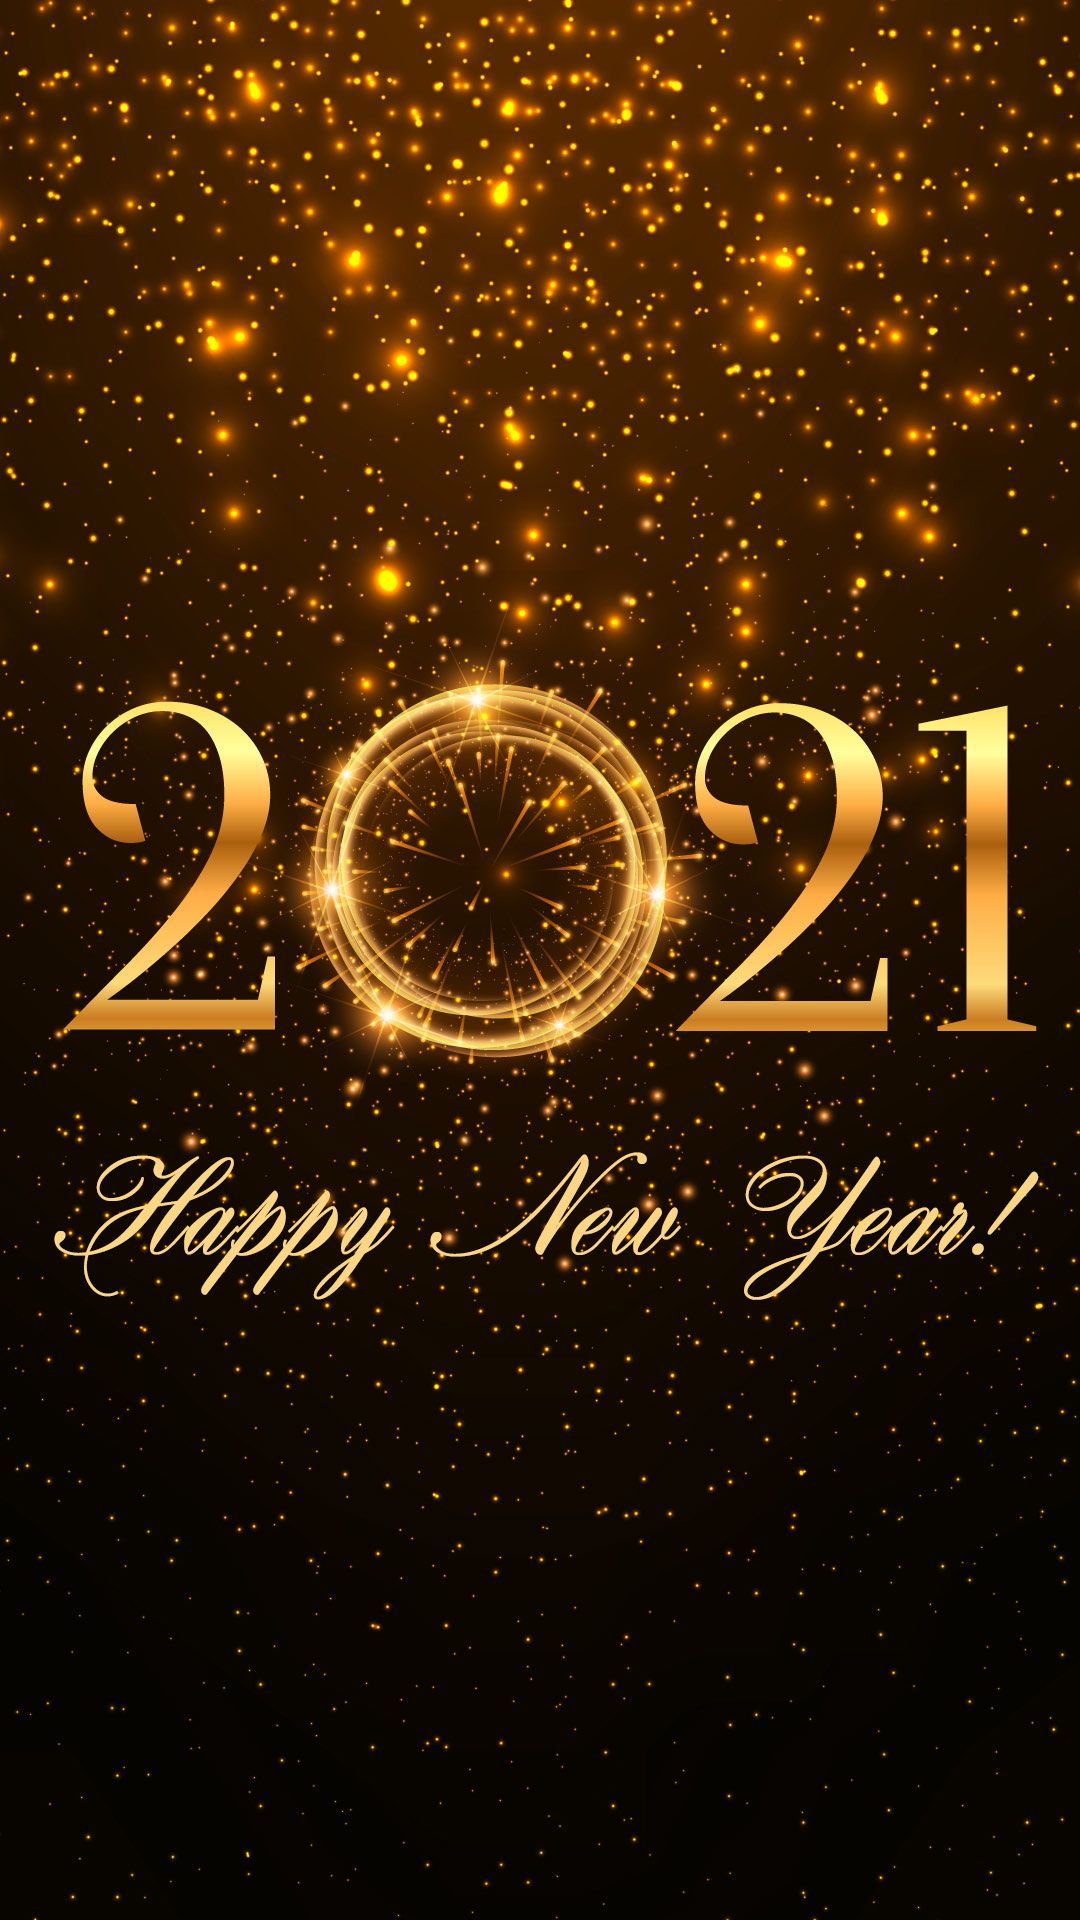 Happy New Year 2021. Happy new year greetings, Happy new year picture, Happy new year image